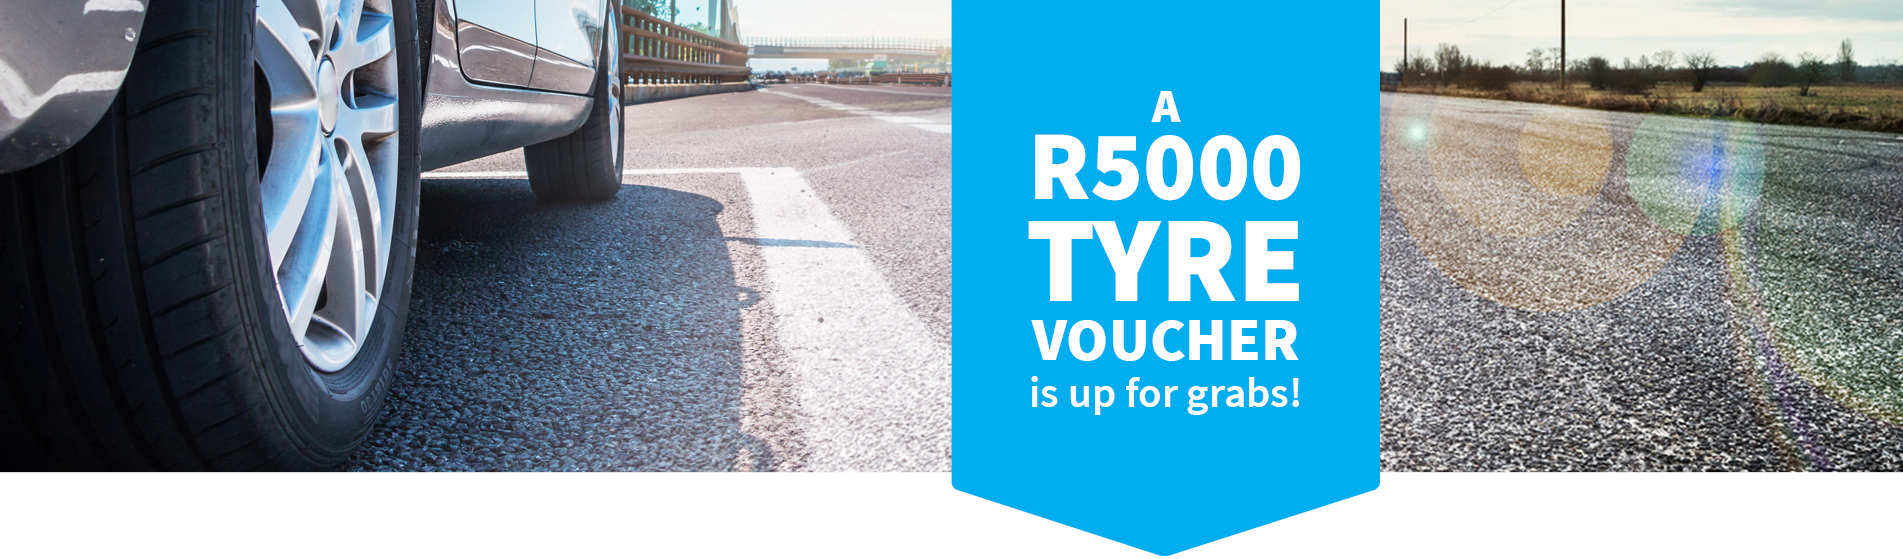 Win a Tyre voucher worth R5000